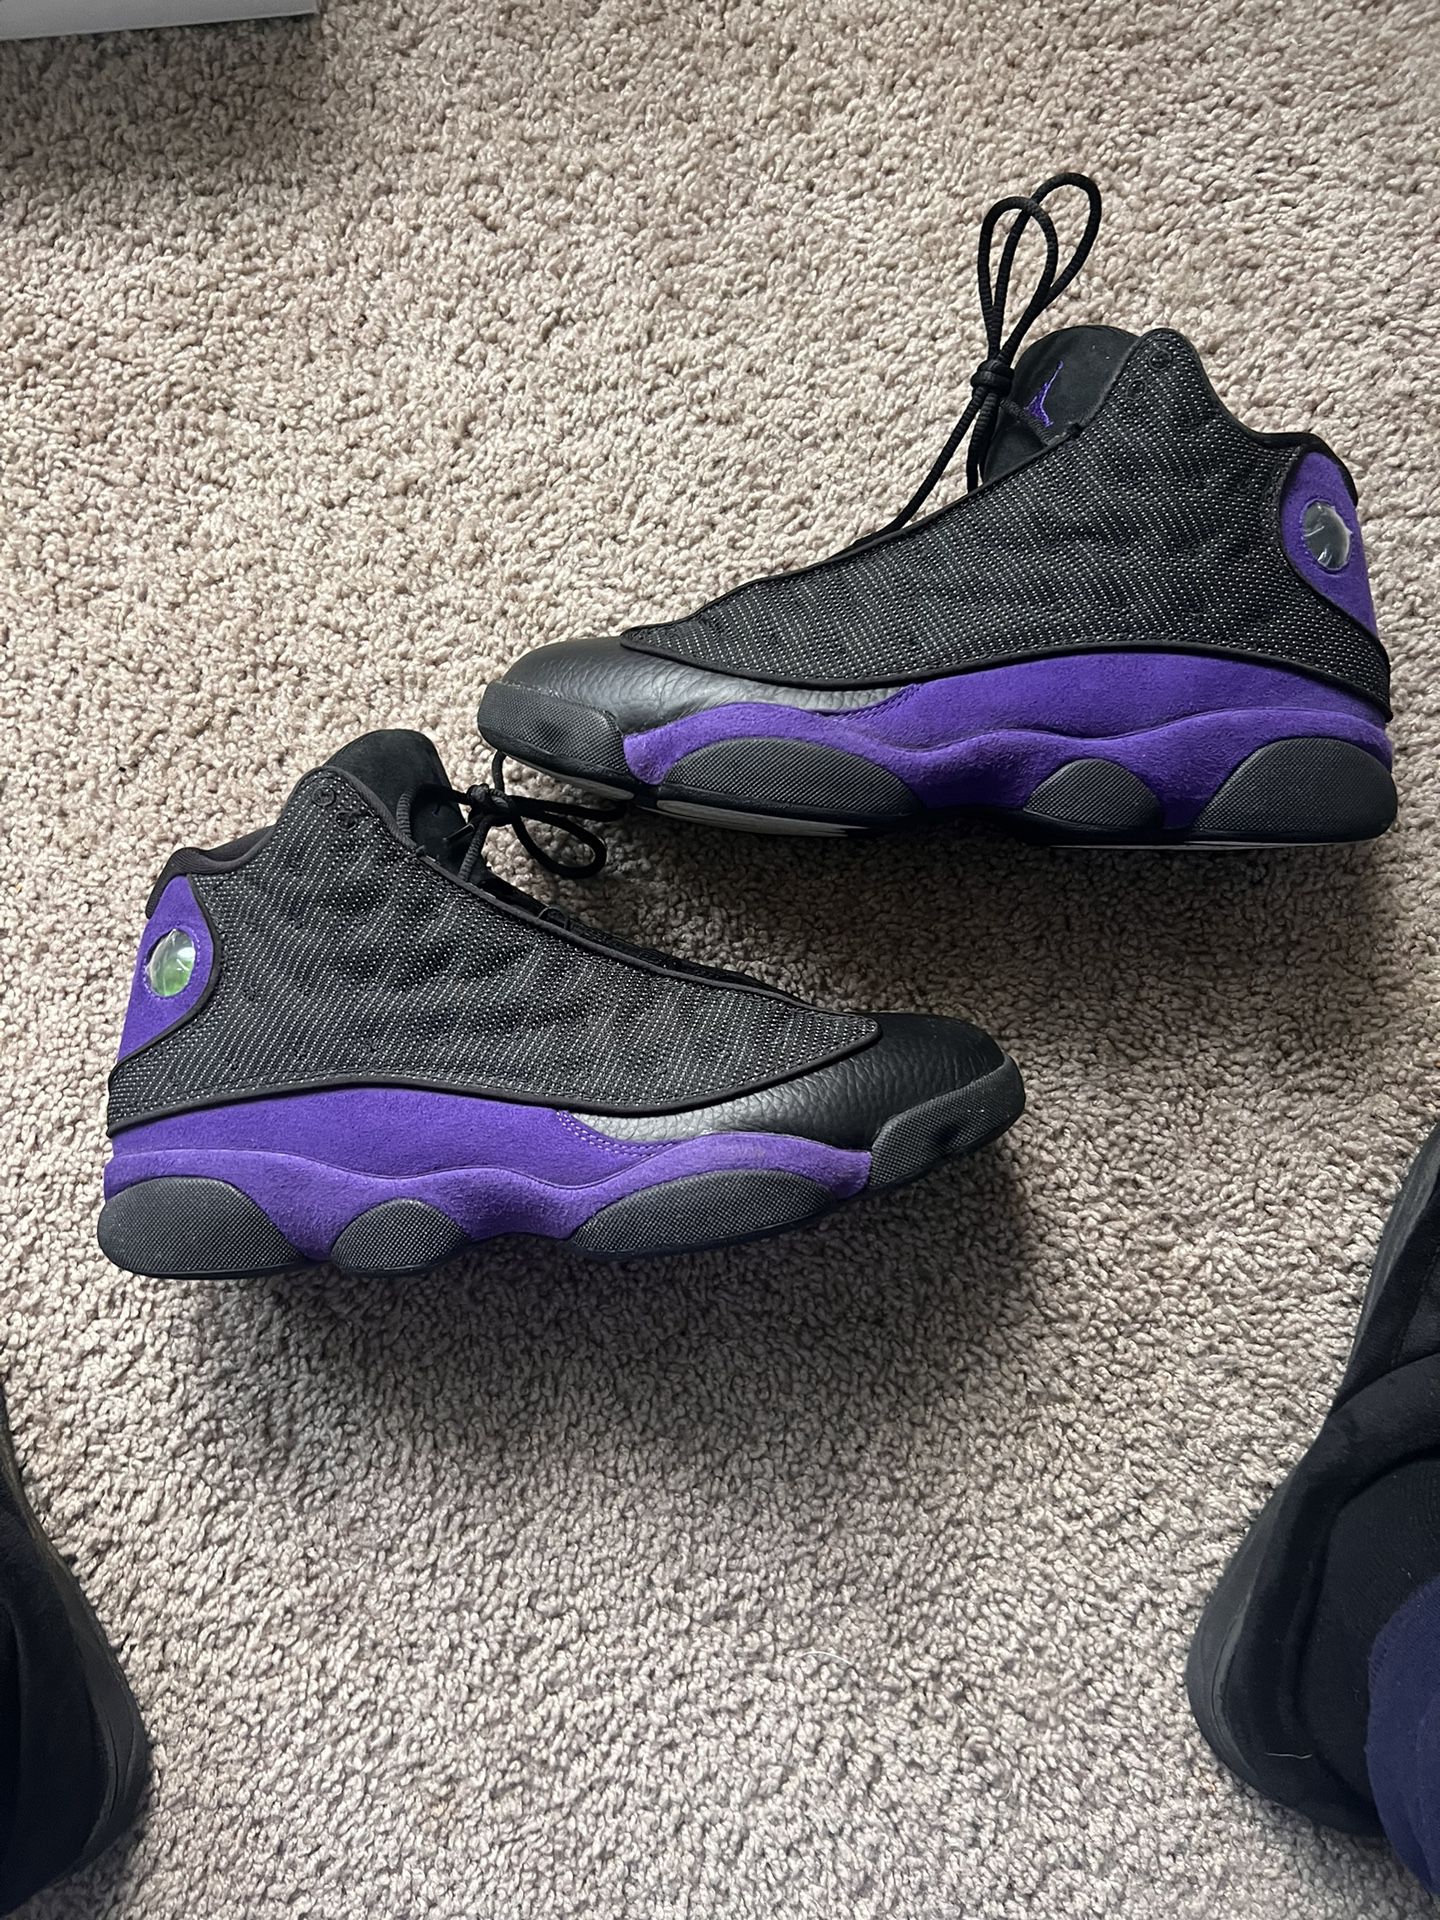 Jordan 13 Purple Court